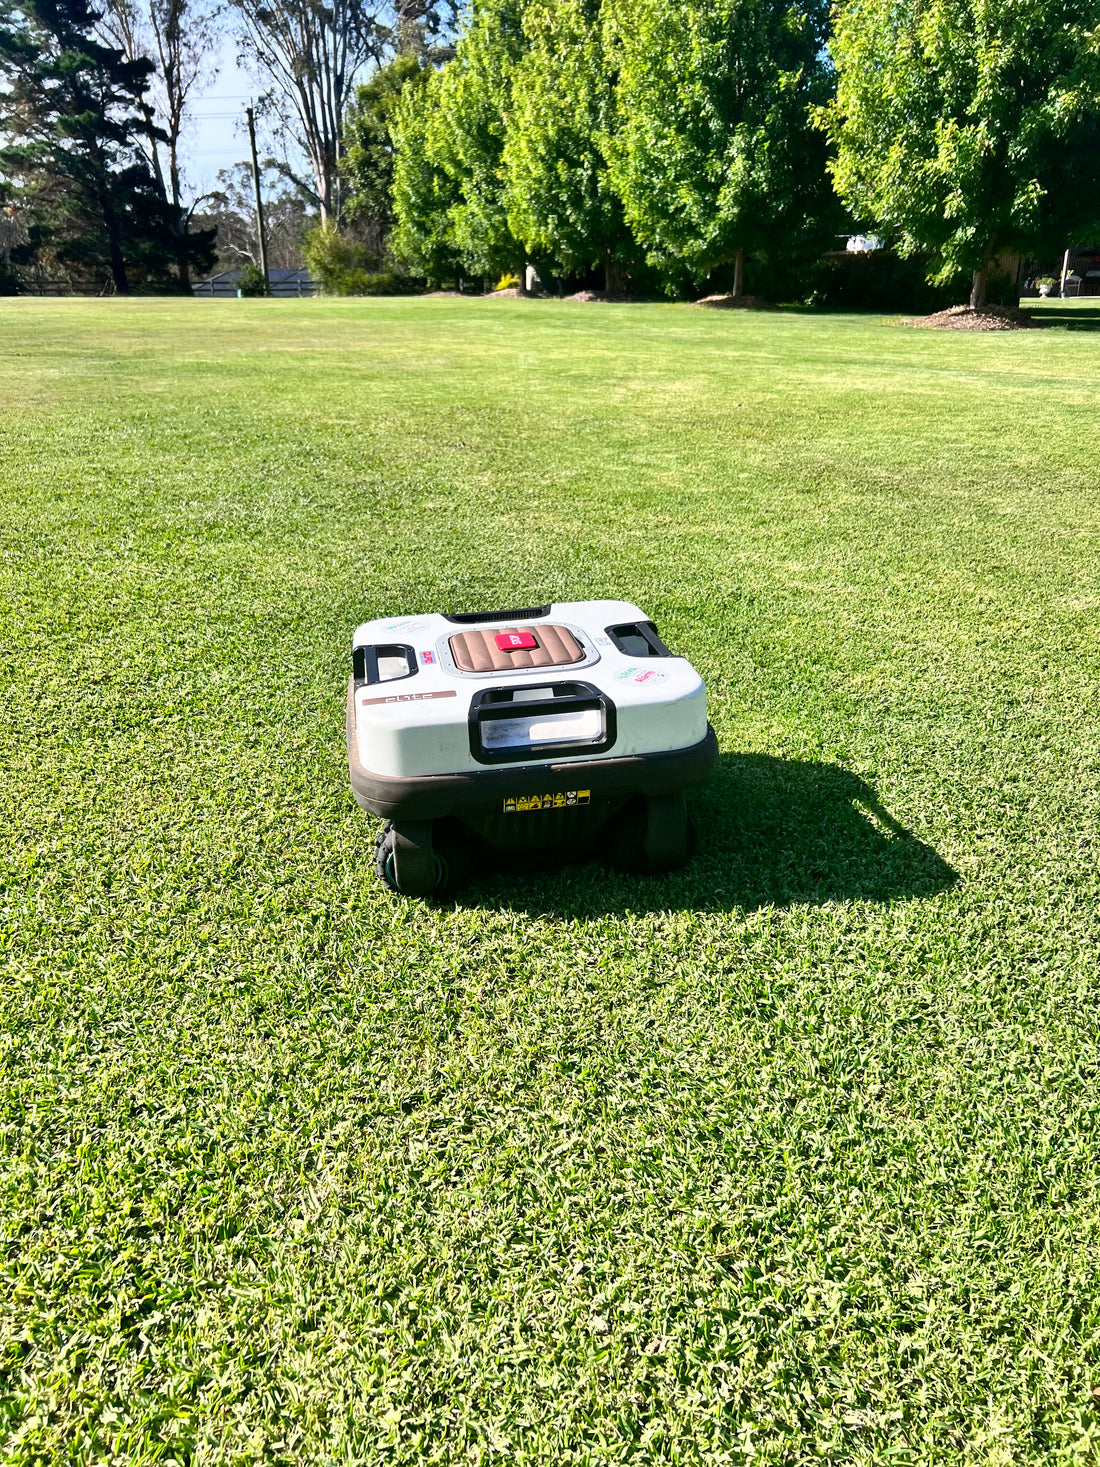 Robot Lawn mower beautiful lawn